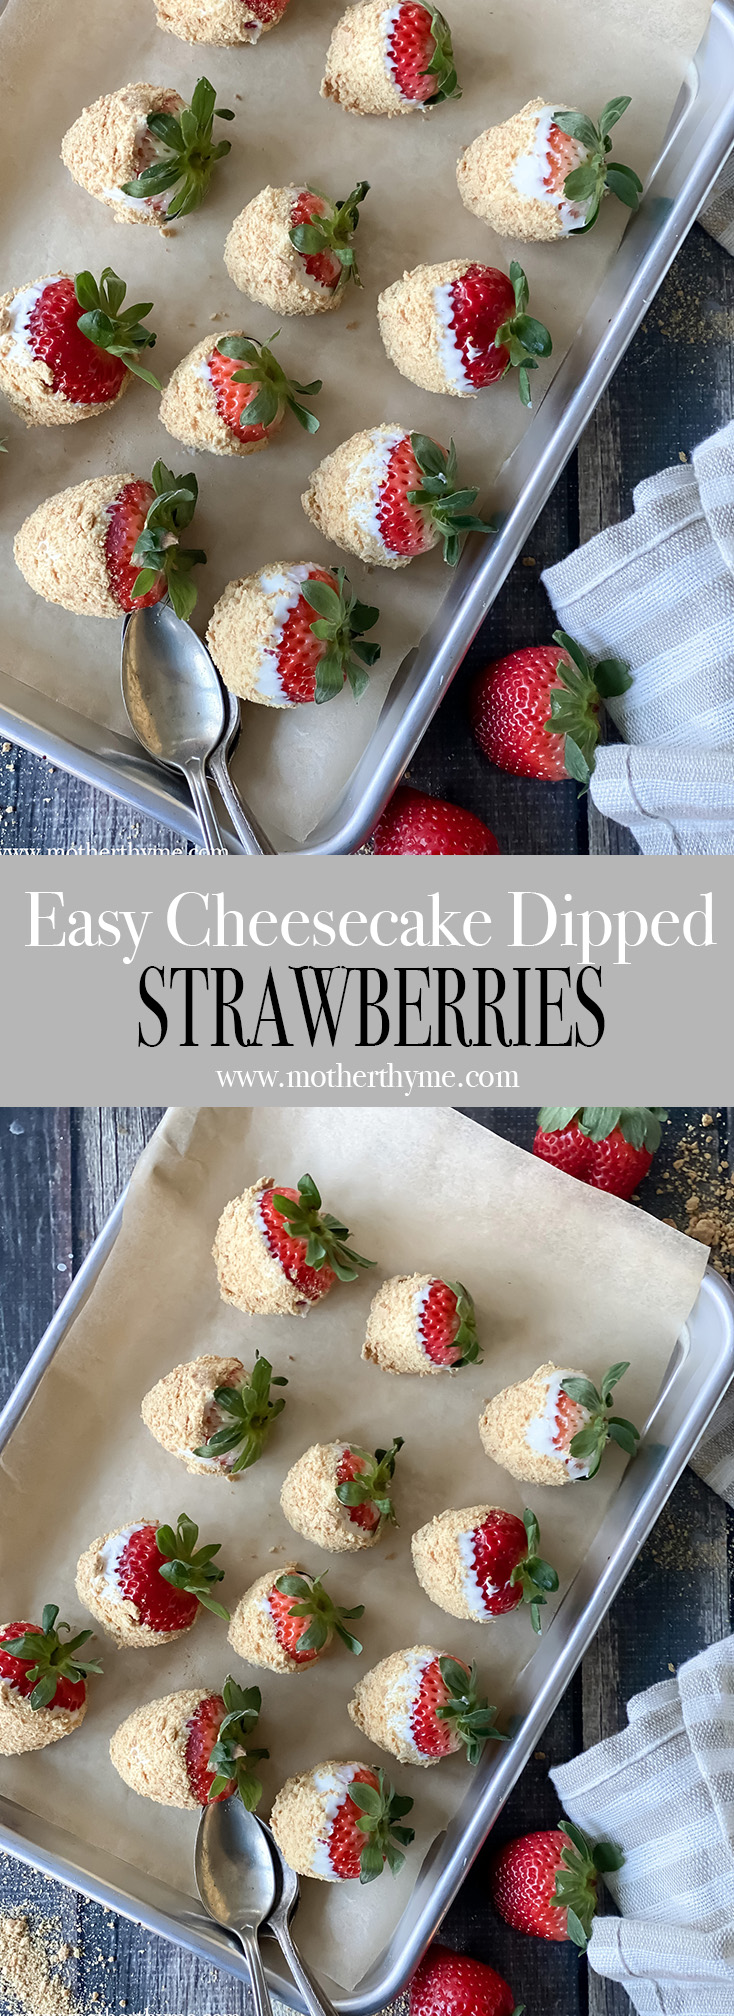 Easy Cheesecake Dipped Strawberries